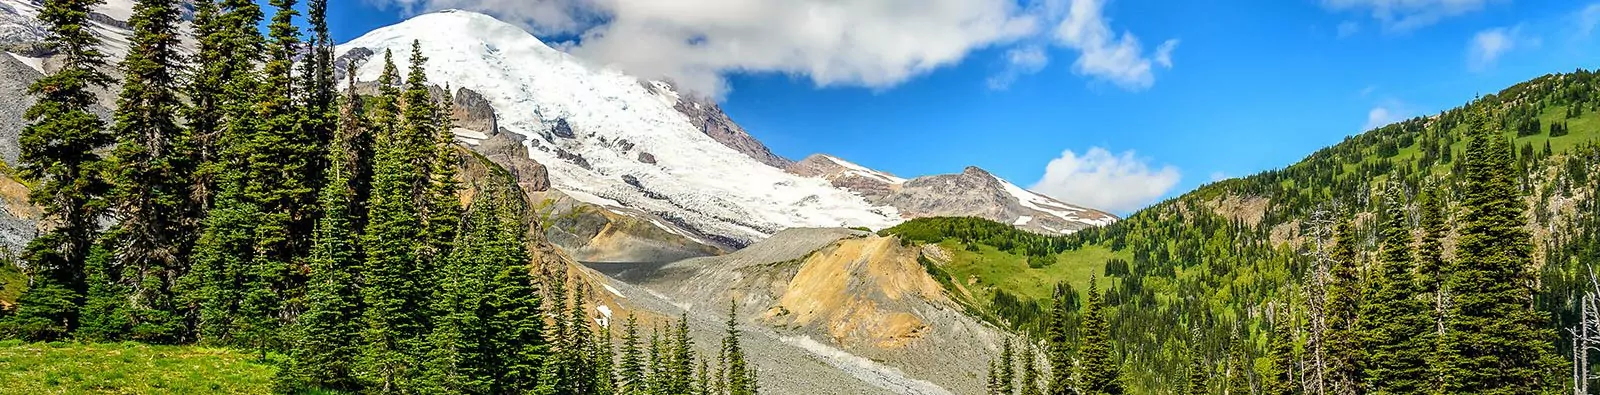 Glaciers on Mount Rainier in Mount Rainier National Park